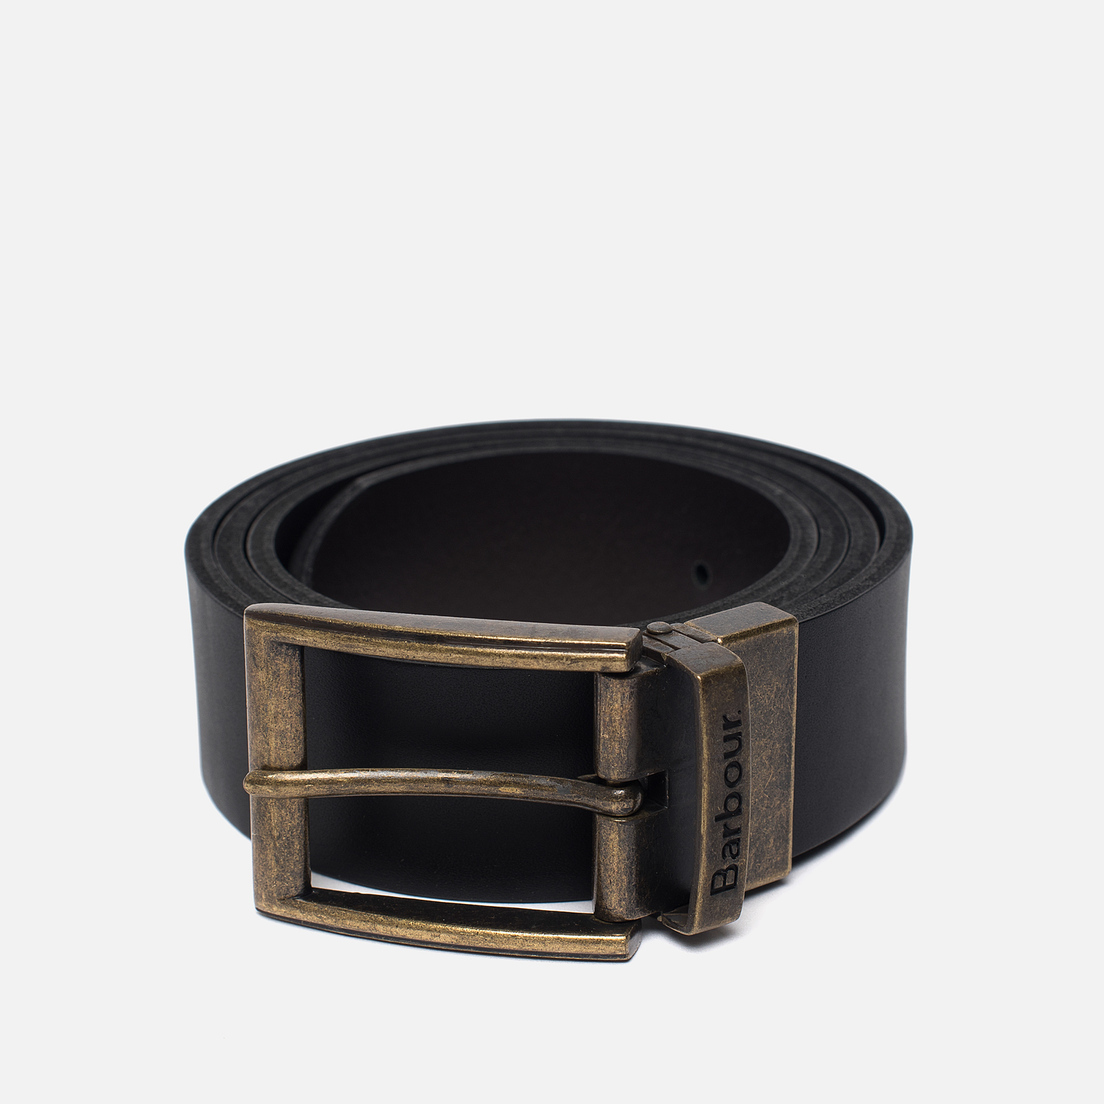 Barbour Ремень Reversible Leather Gift Box